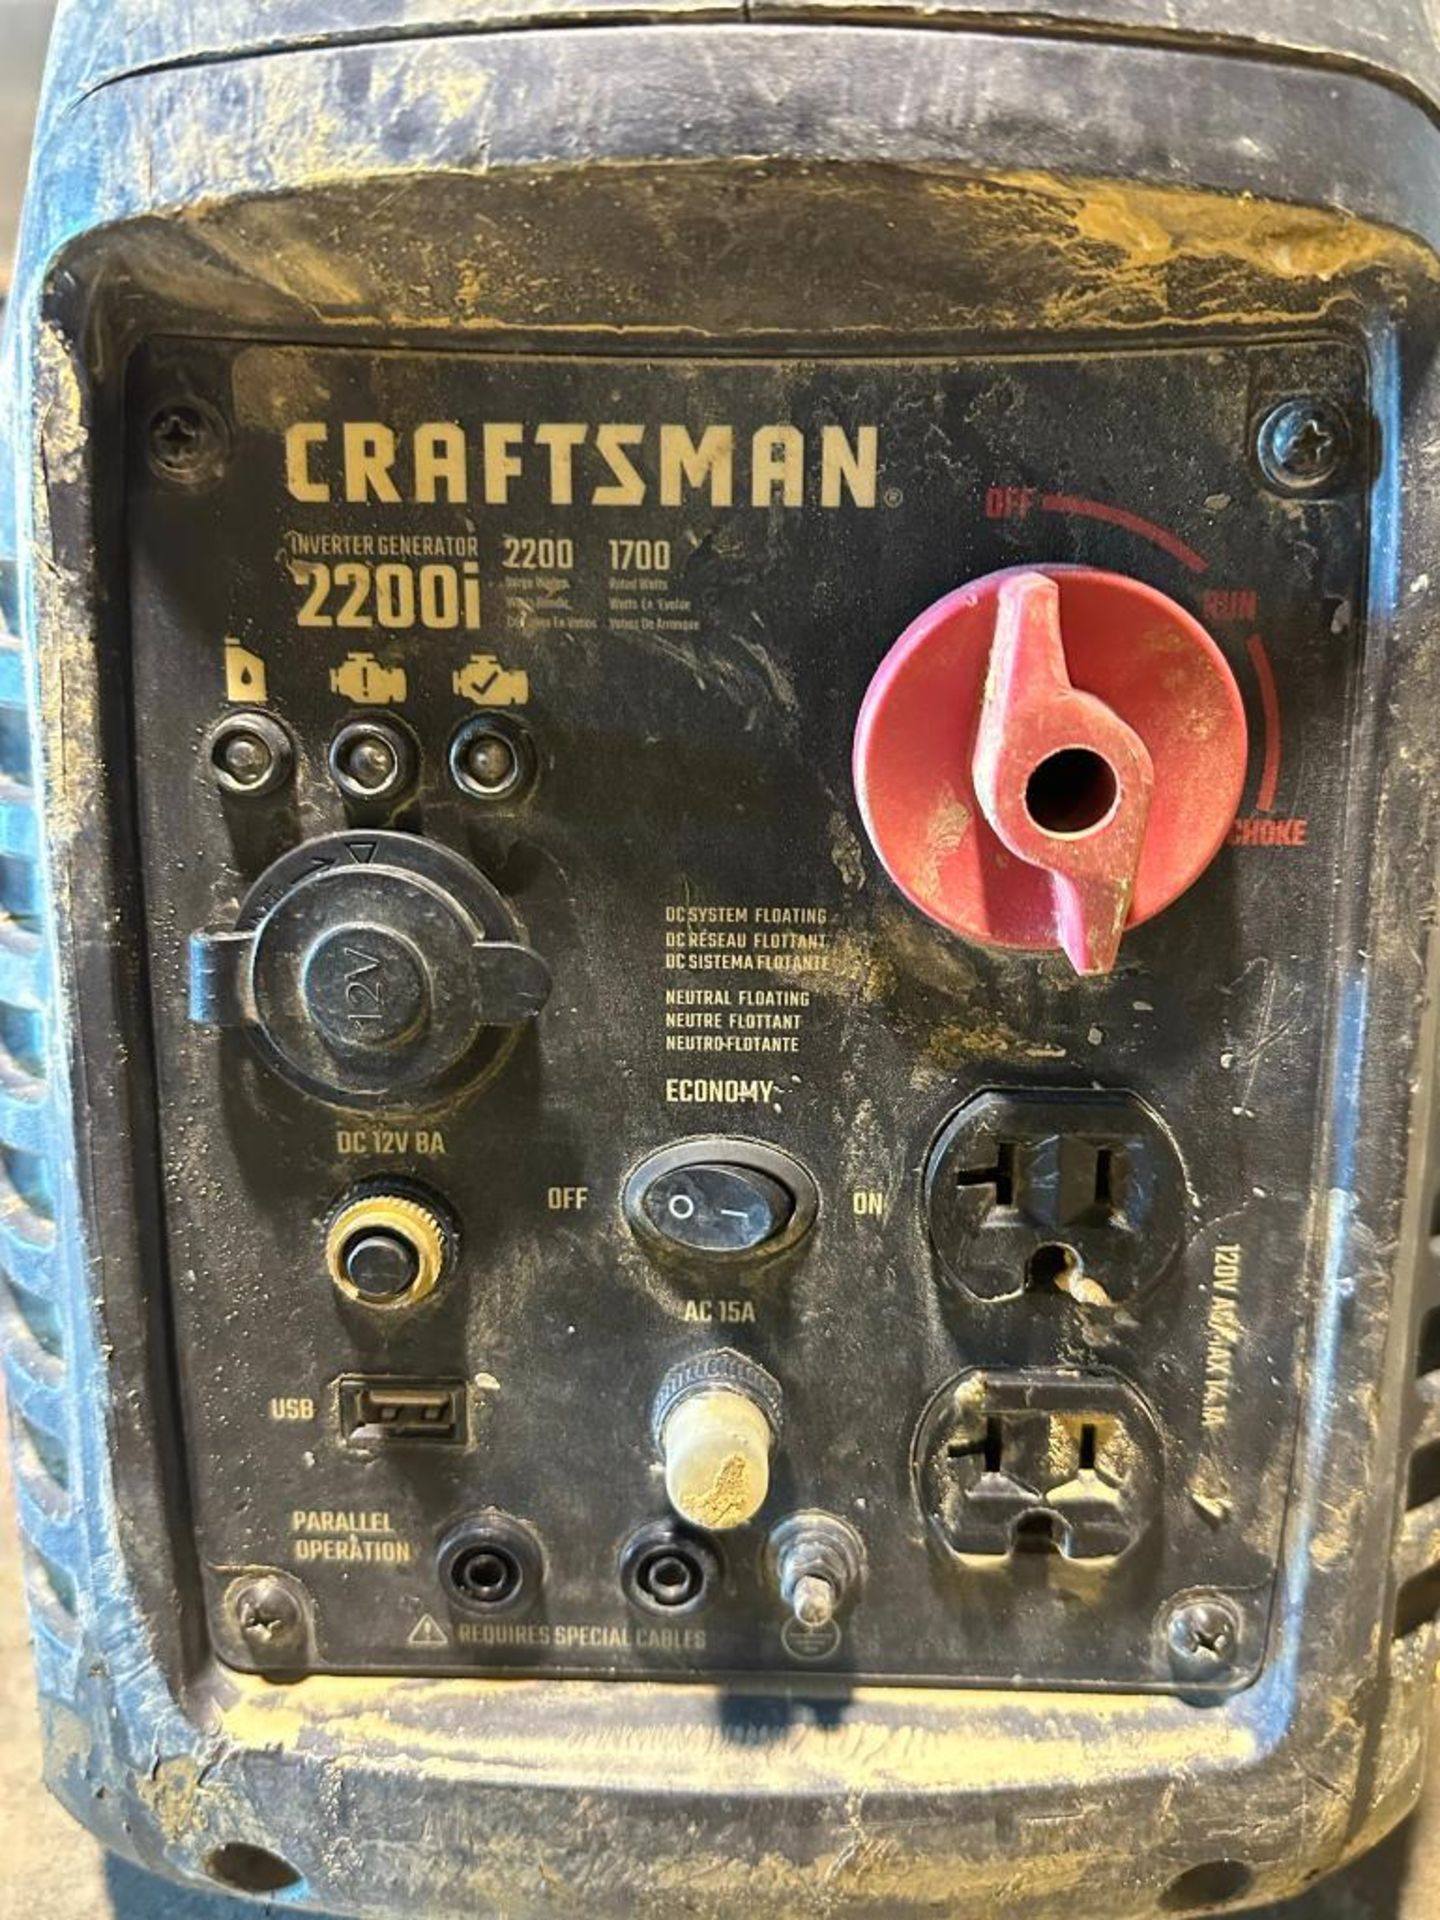 Craftsman 2200i generator, runs and operates - Image 5 of 5